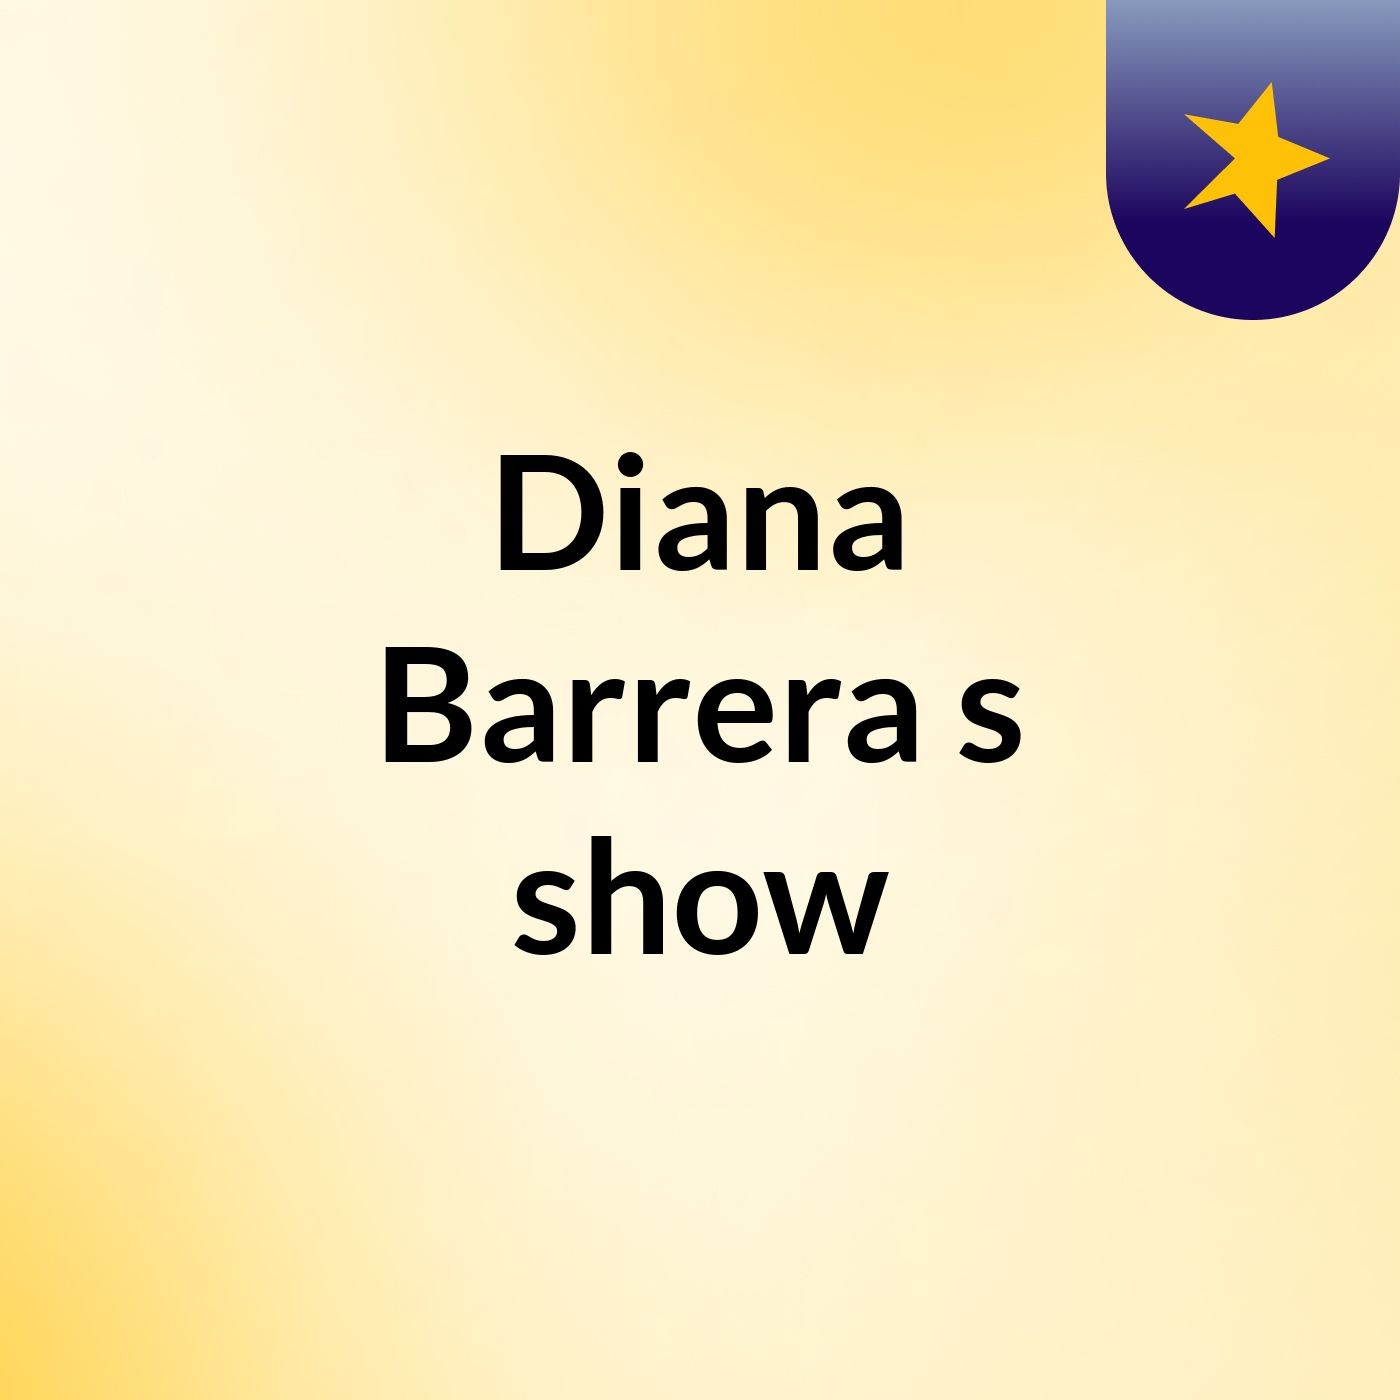 Diana Barrera's show